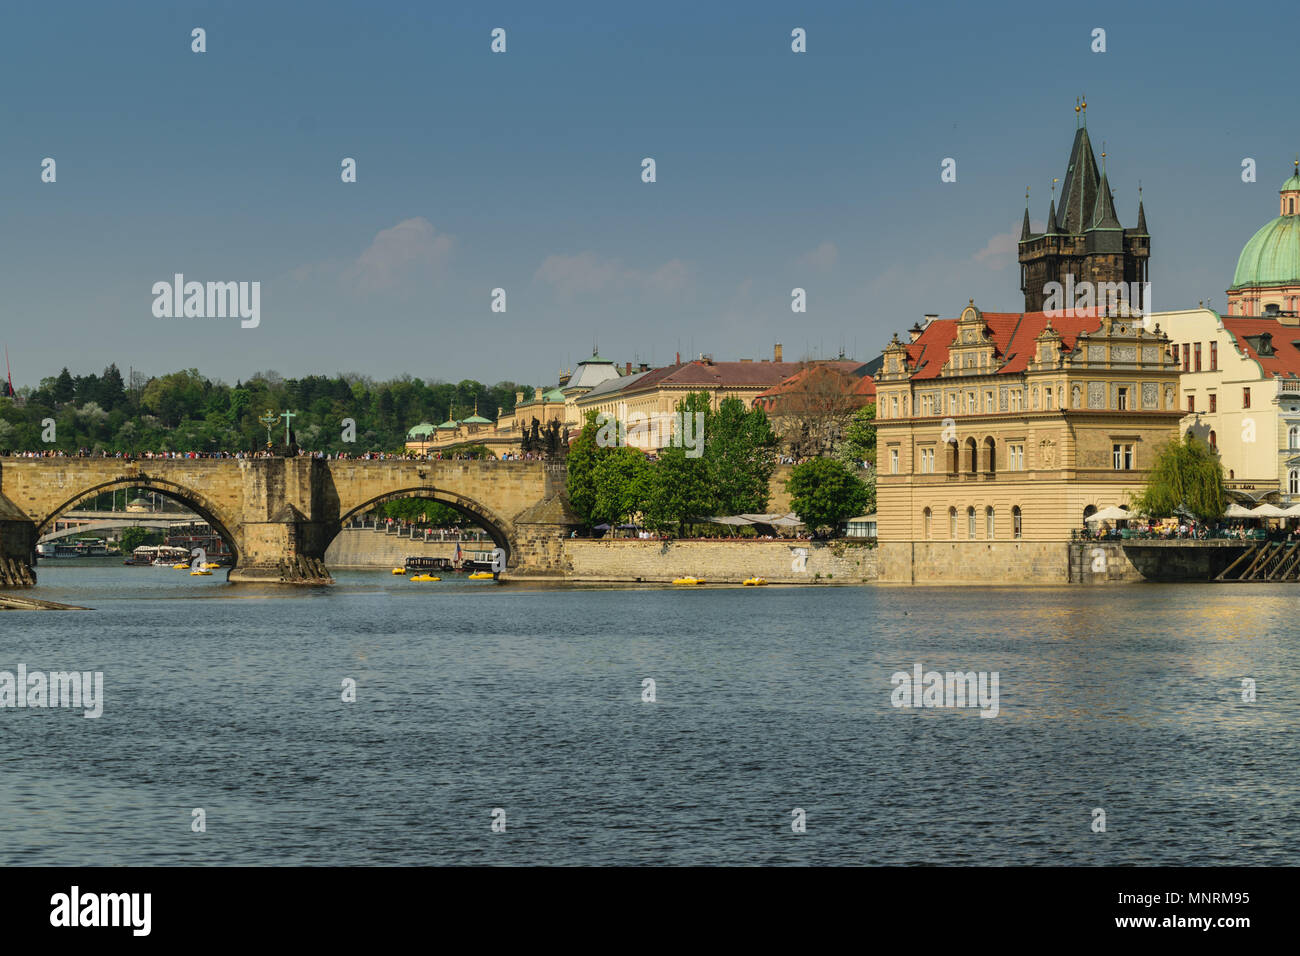 Charles Bridge in Old Town, Prague Stock Photo